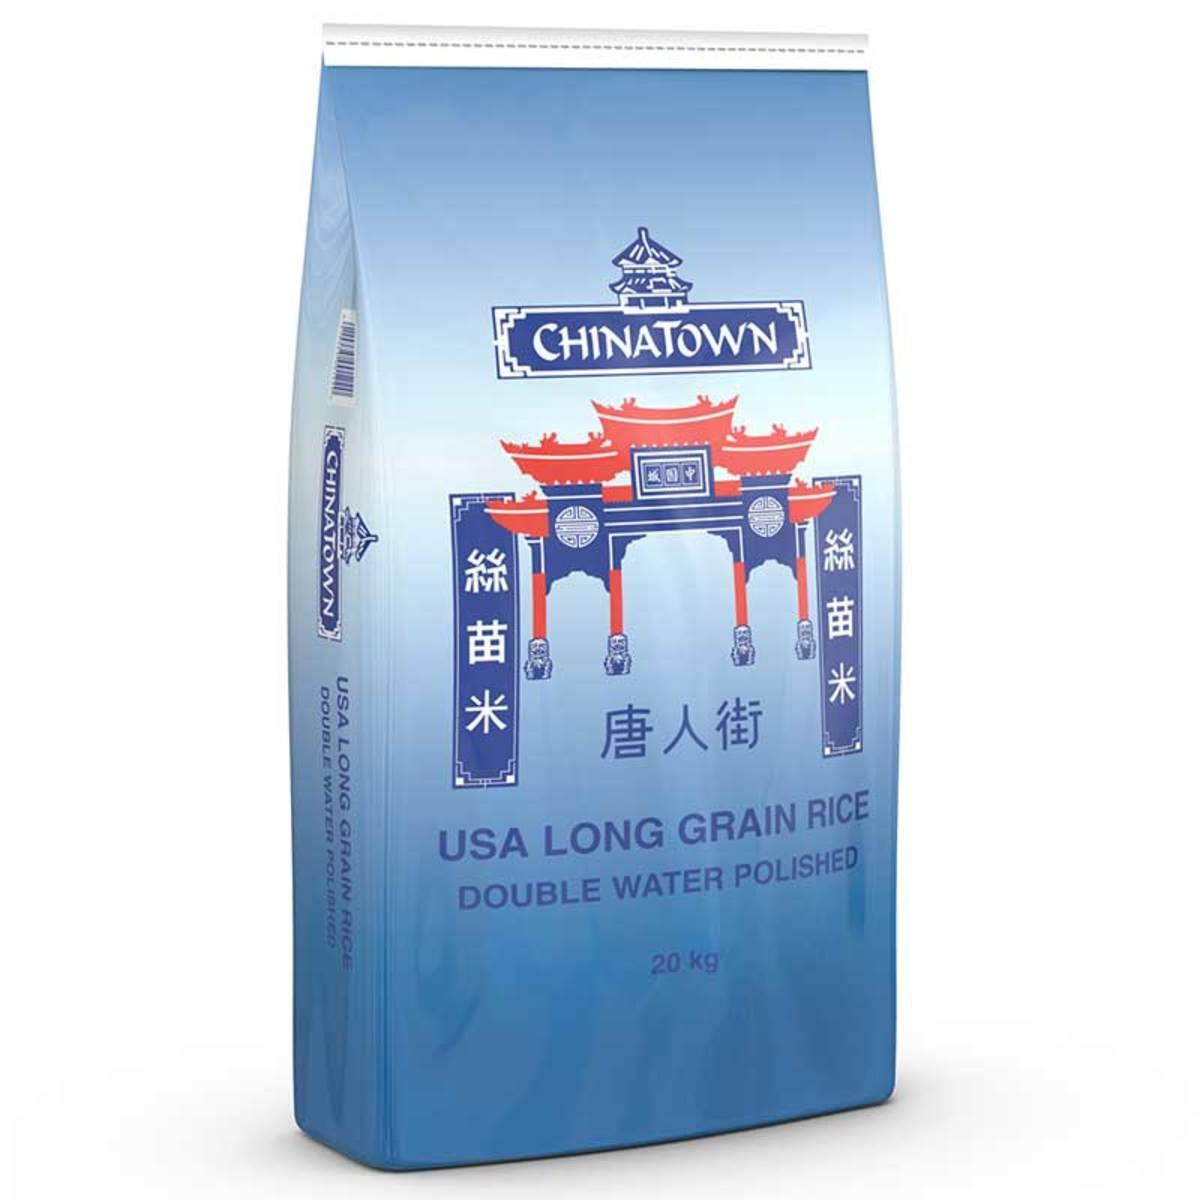 Chinatown USA Long Grain Rice, 20kg Rice Costco UK   